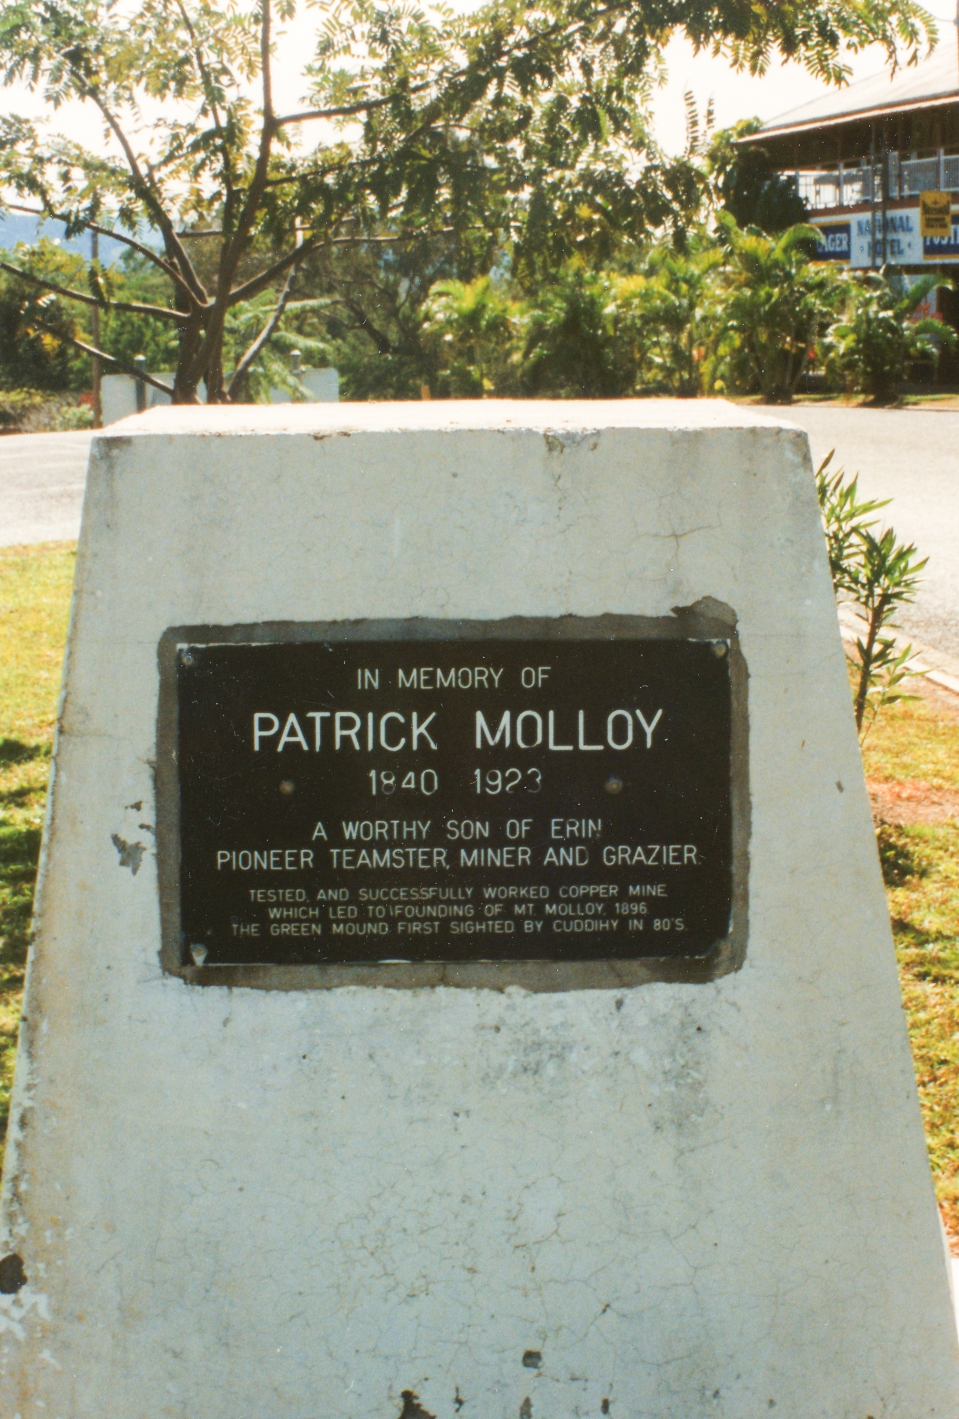 Memorial to Patrick Molloy at Mt Molloy, North Queensland